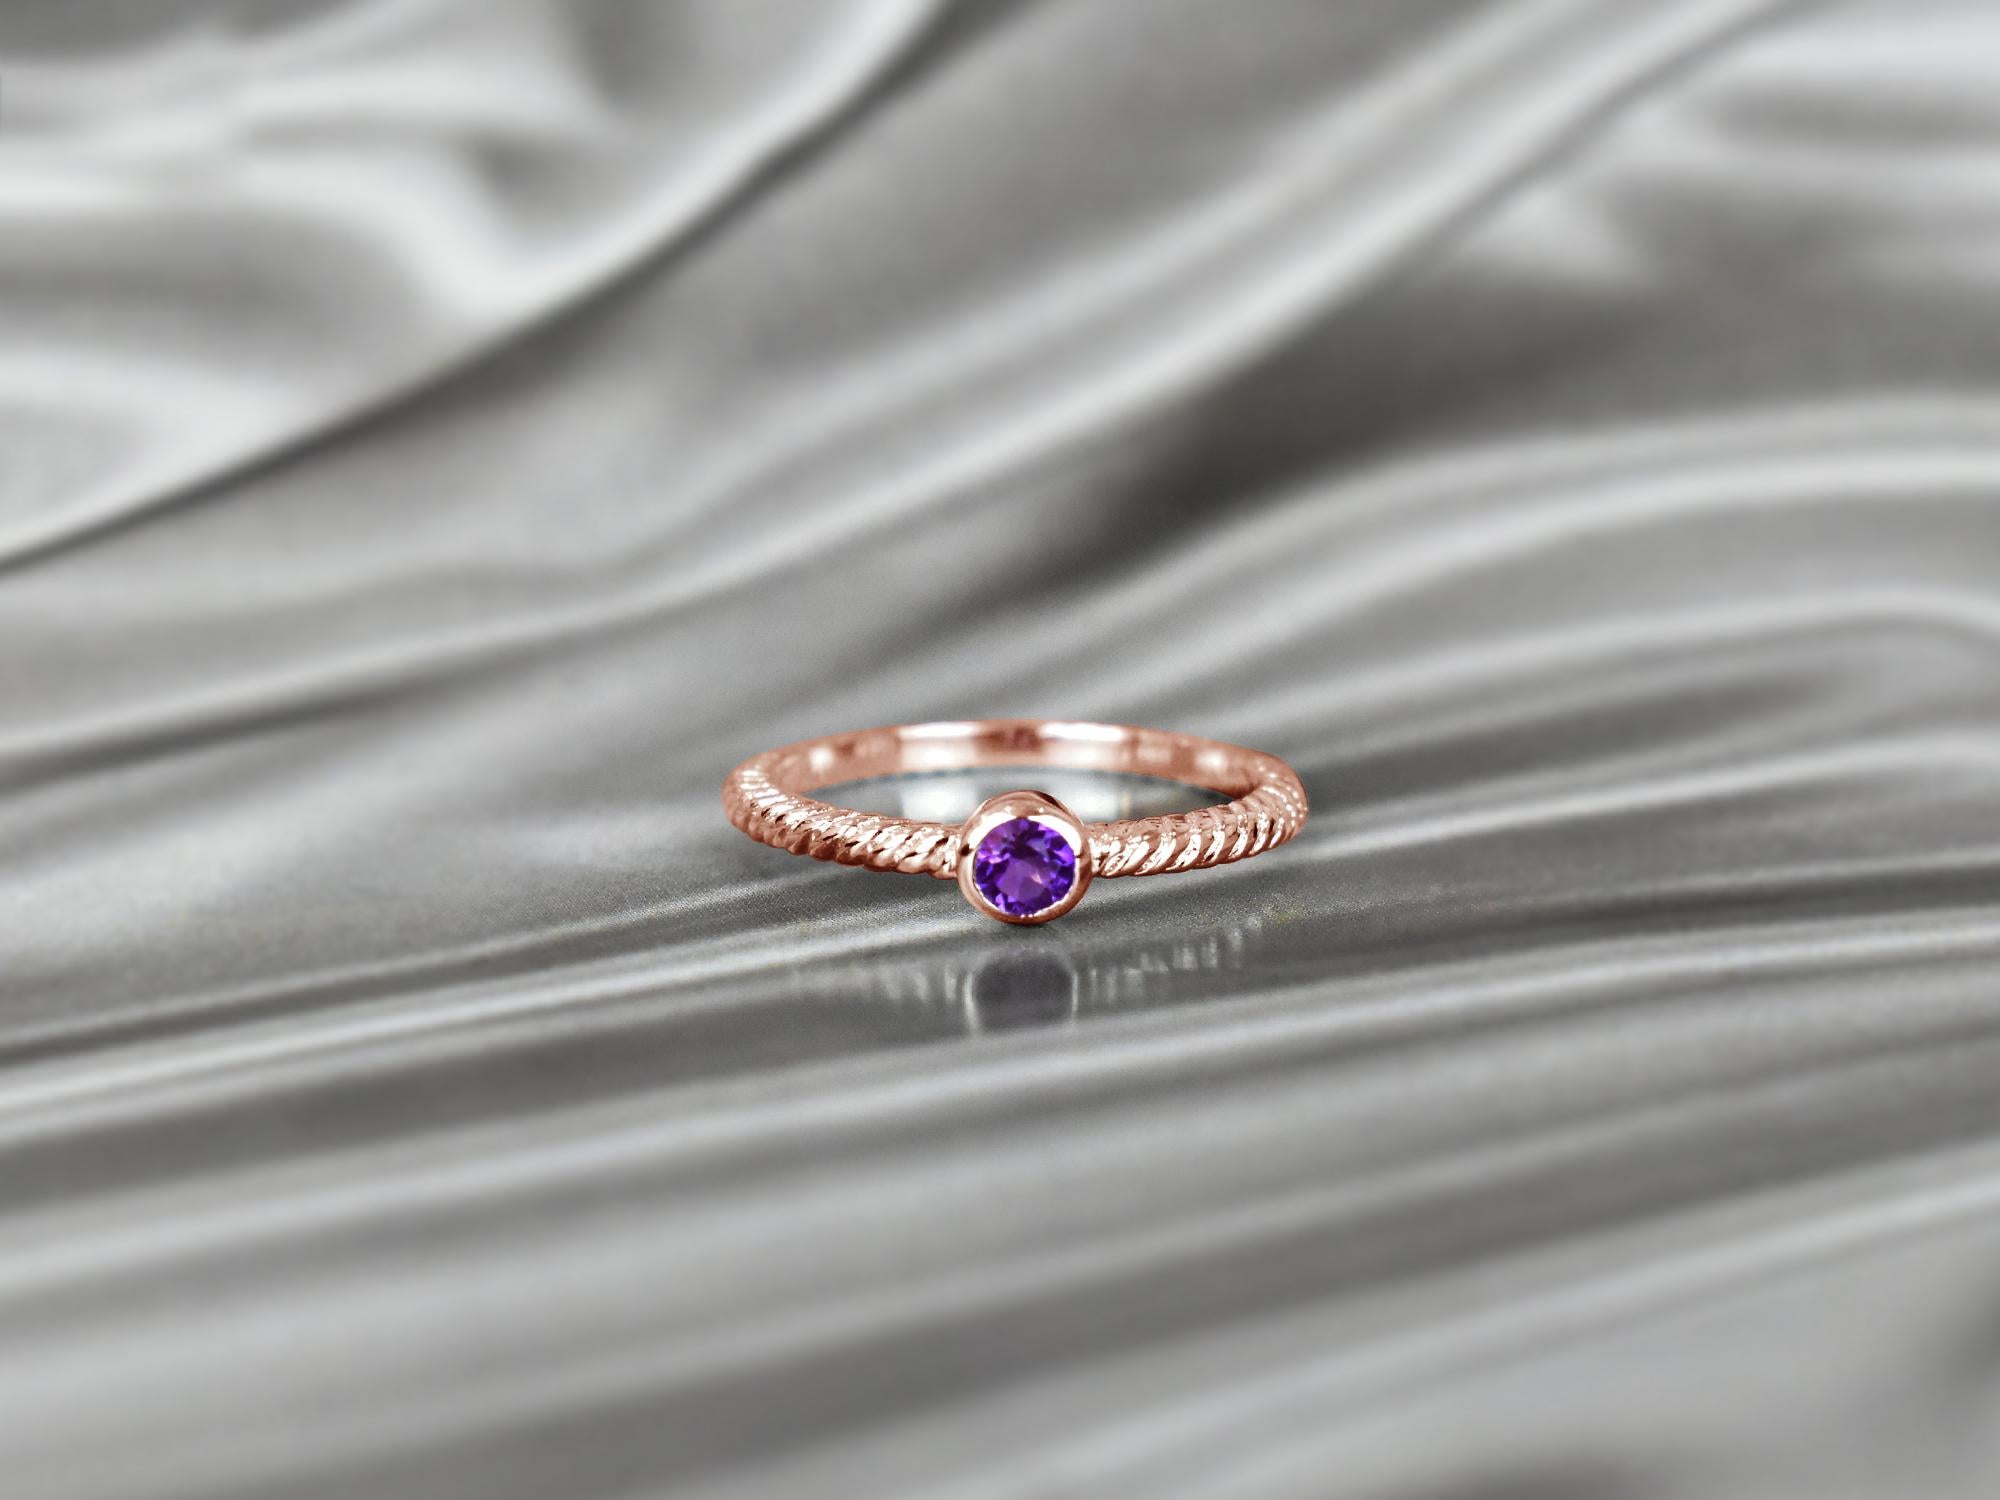 For Sale:  14k Gold Round Gemstone 3.5mm Round Gemstone Ring Birthstone Ring Stackable Ring 2